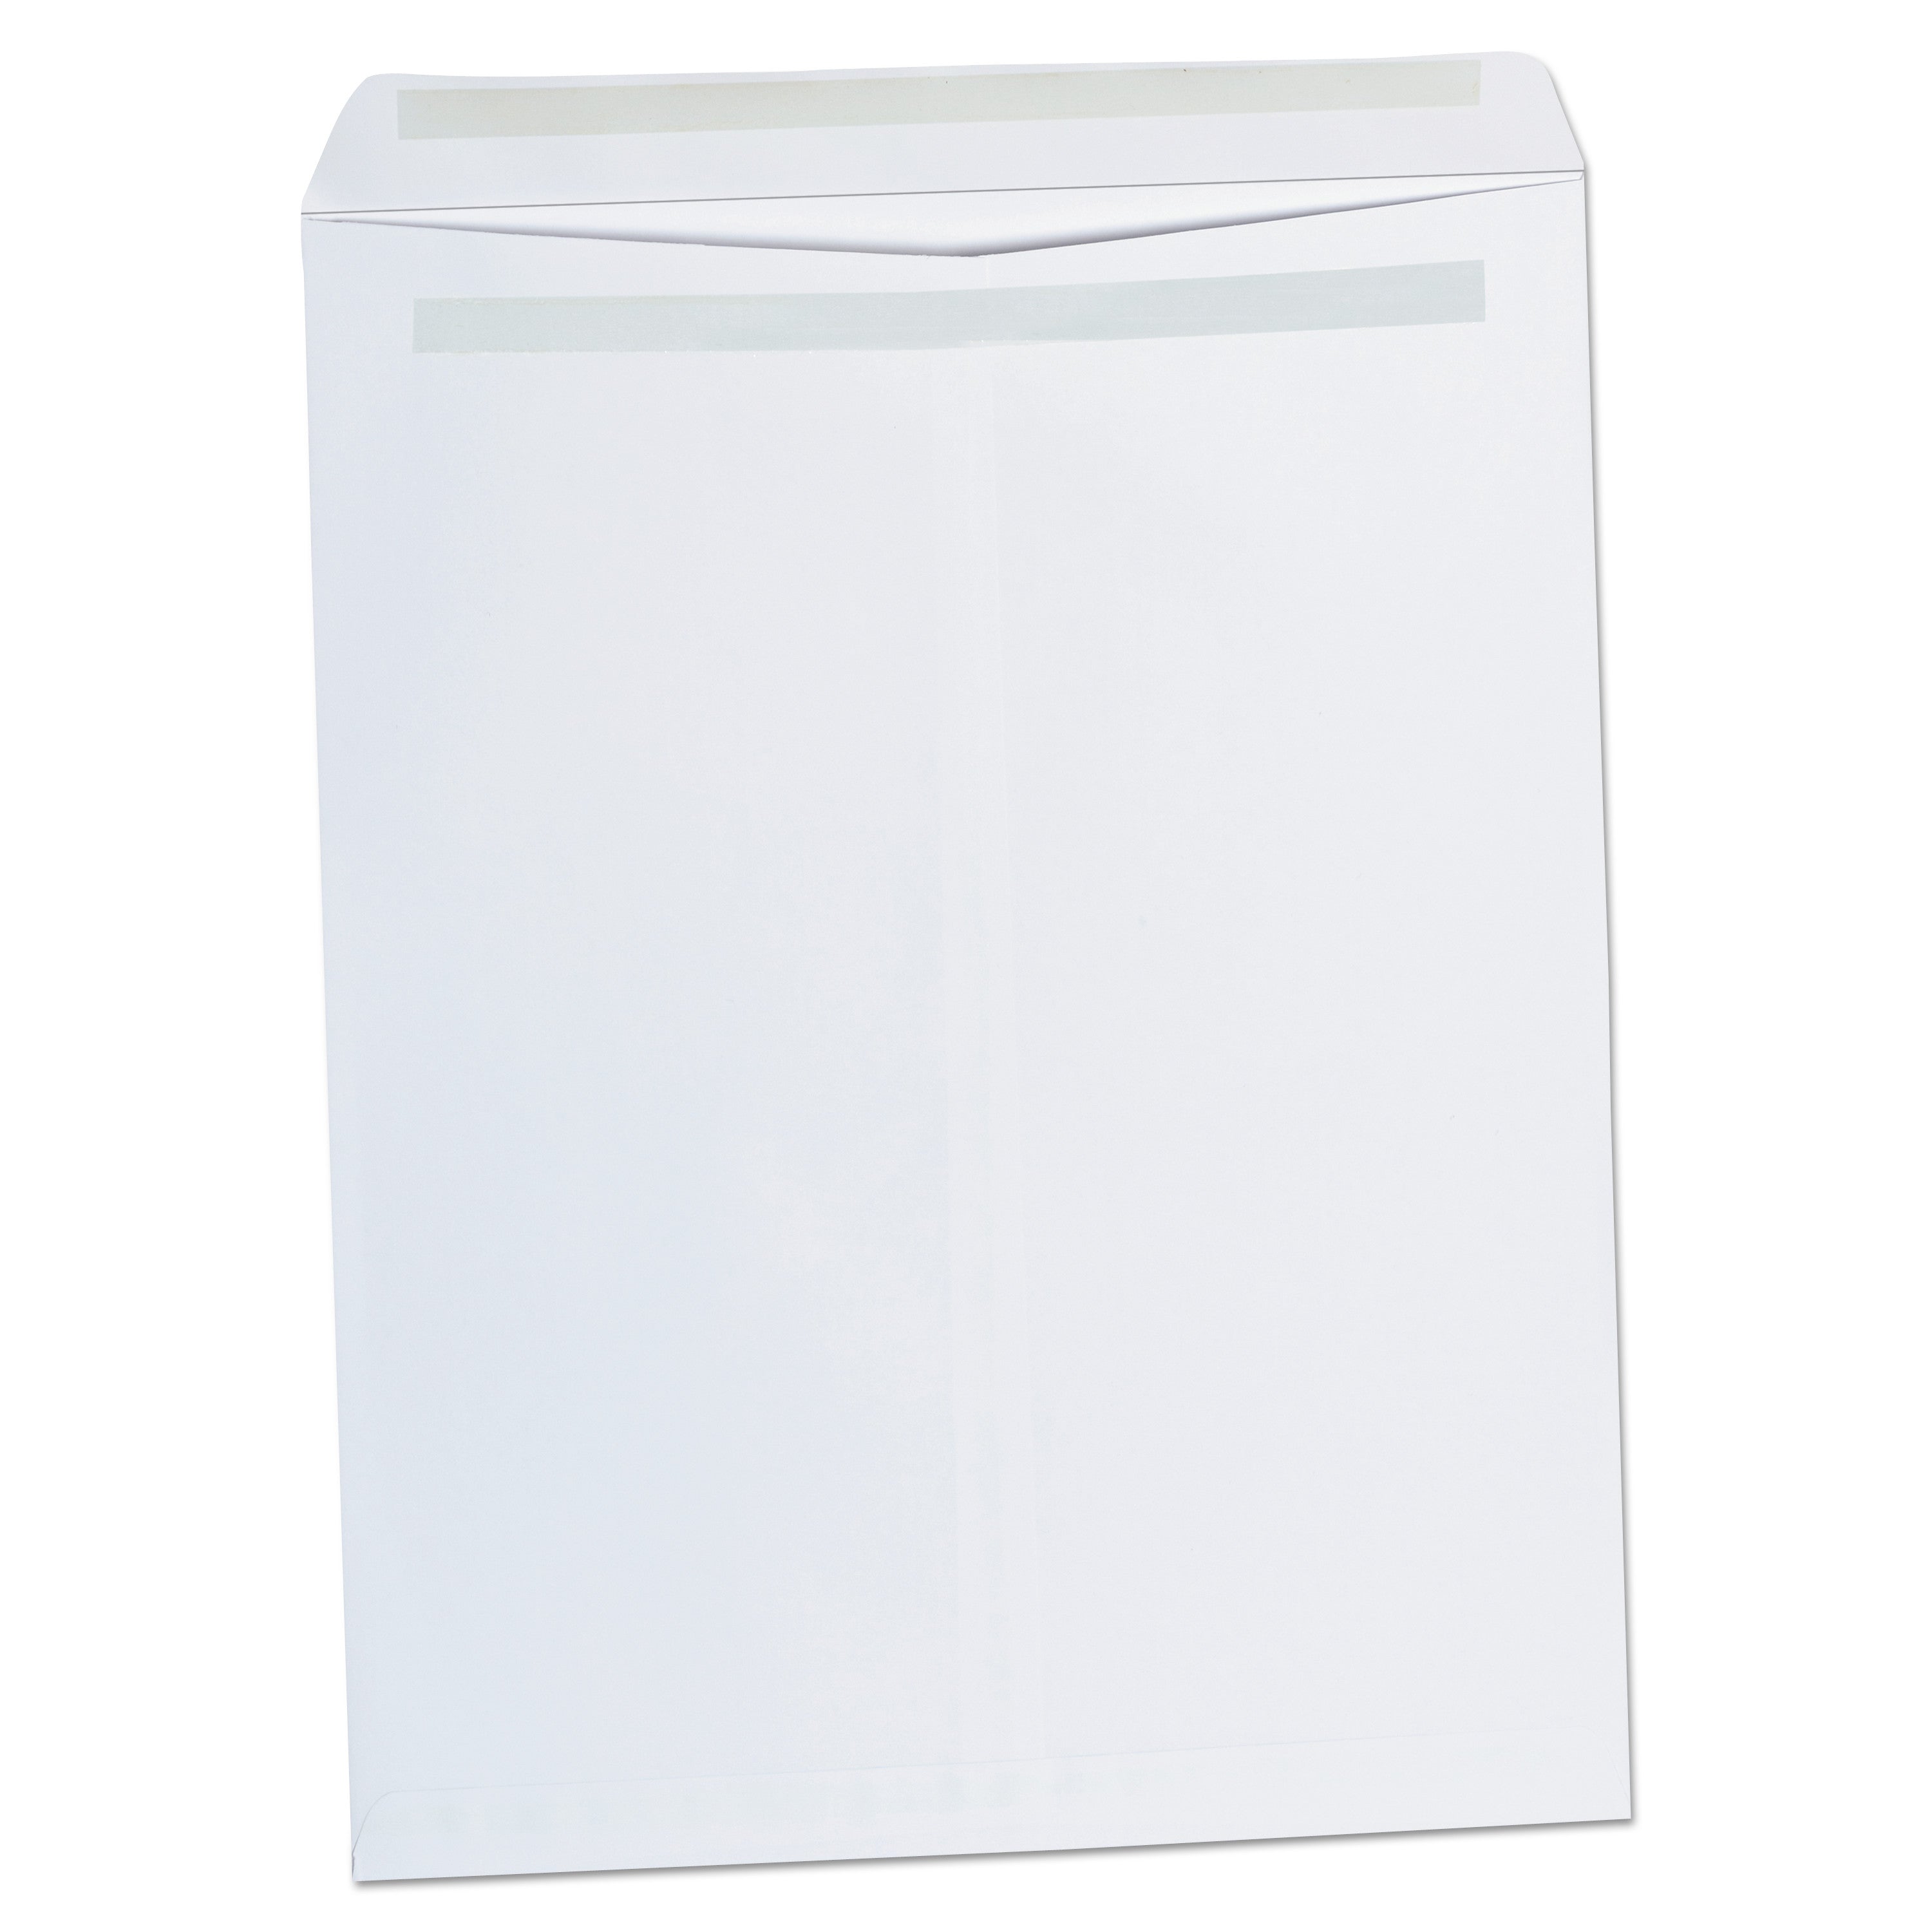 Self-Stick Open End Catalog Envelope, #15 1/2, Square Flap, Self-Adhesive Closure, 12 x 15.5, White, 100/Box - 